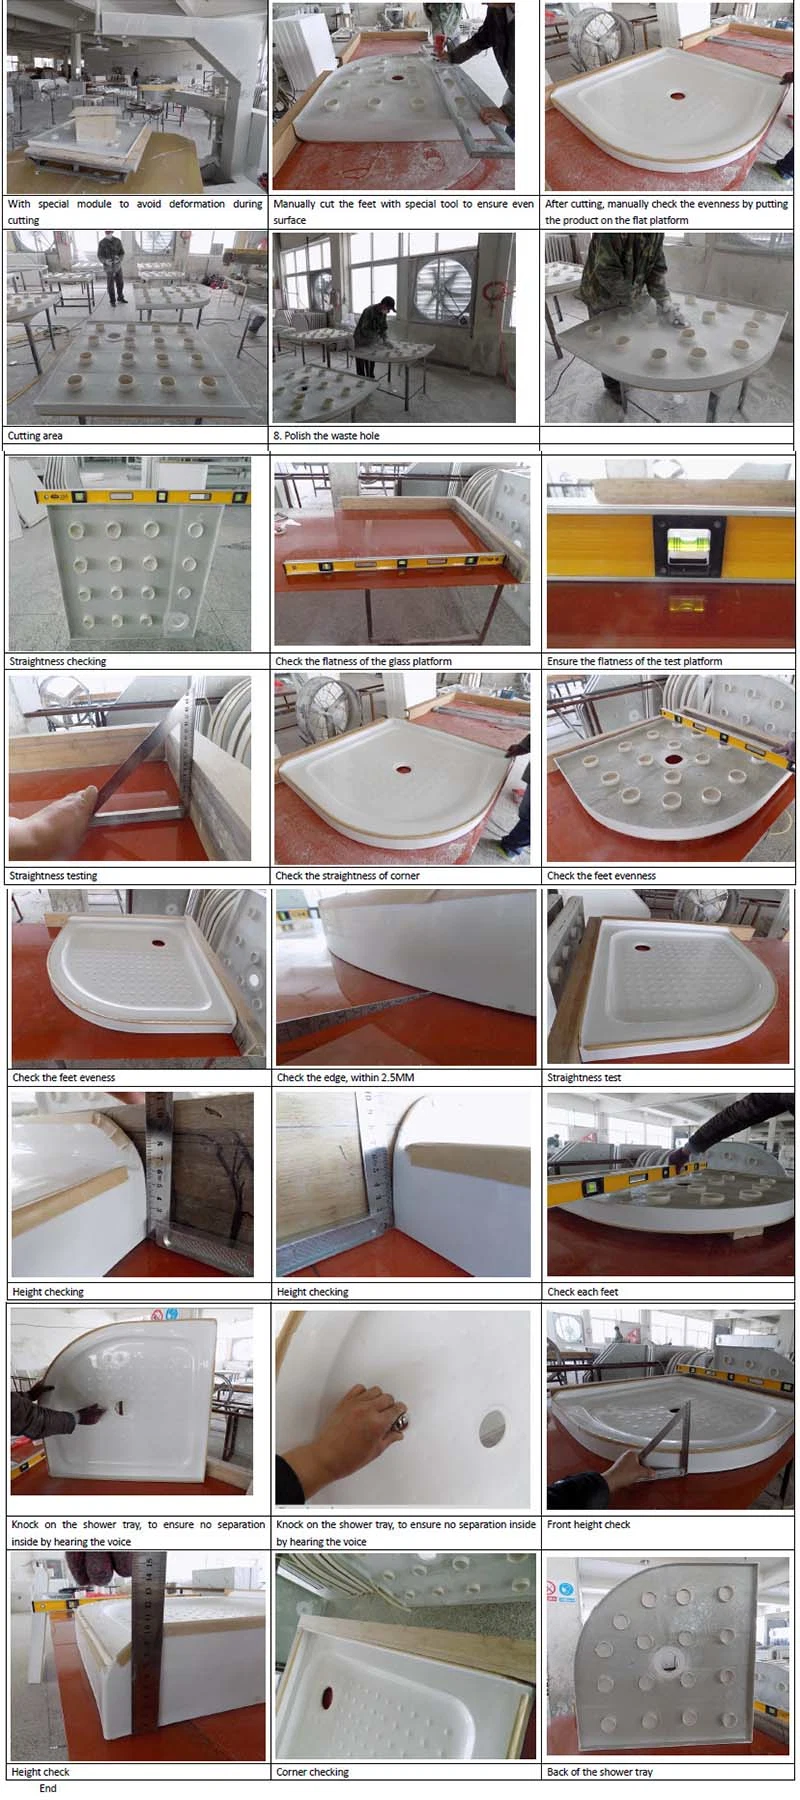 Sanitary Ware Newest Modern Design Square SMC Shower Tray (ASMC9090-3L)